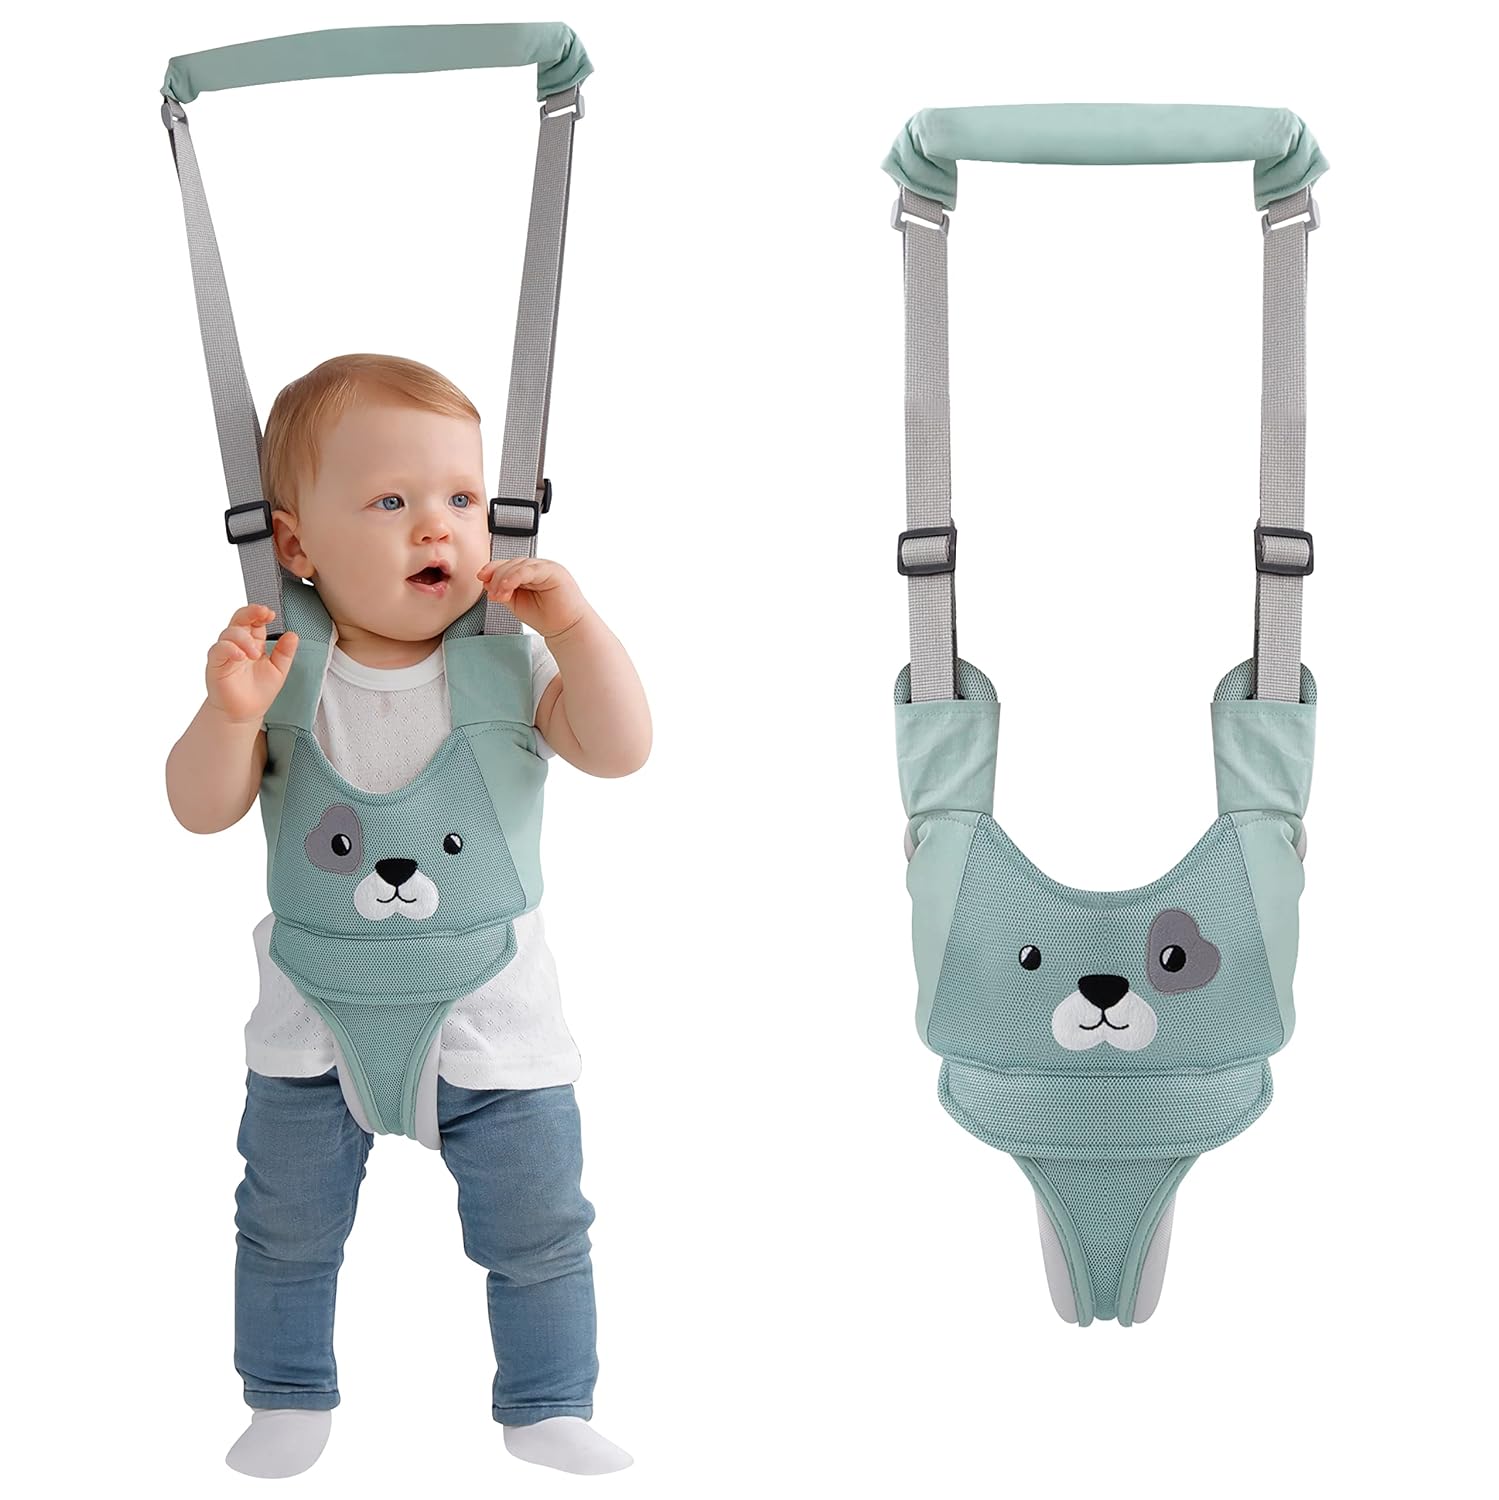 Watolt Baby Walking Harness - Handheld Kids Walker Helper - Toddler Infant Walker Harness Assistant Belt Cykapu